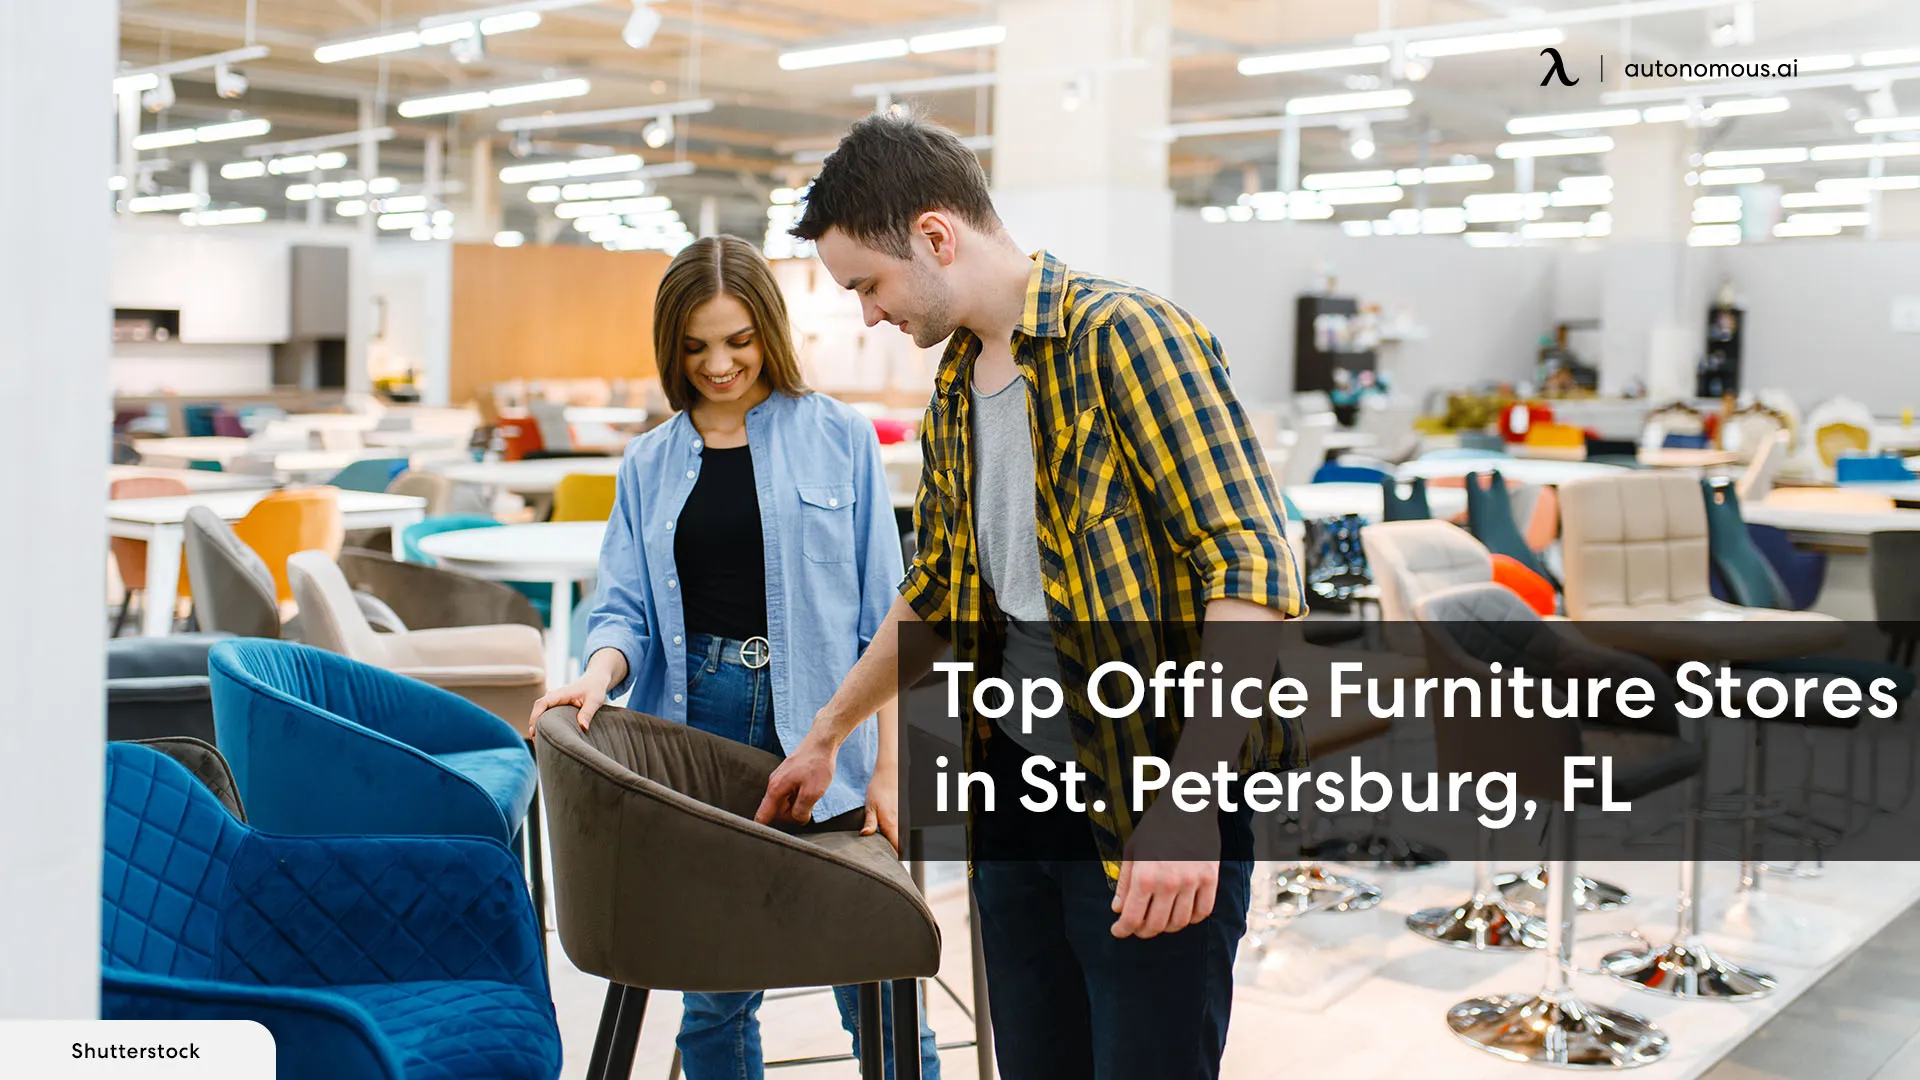 Top 3 Office Furniture Stores in St. Petersburg, FL